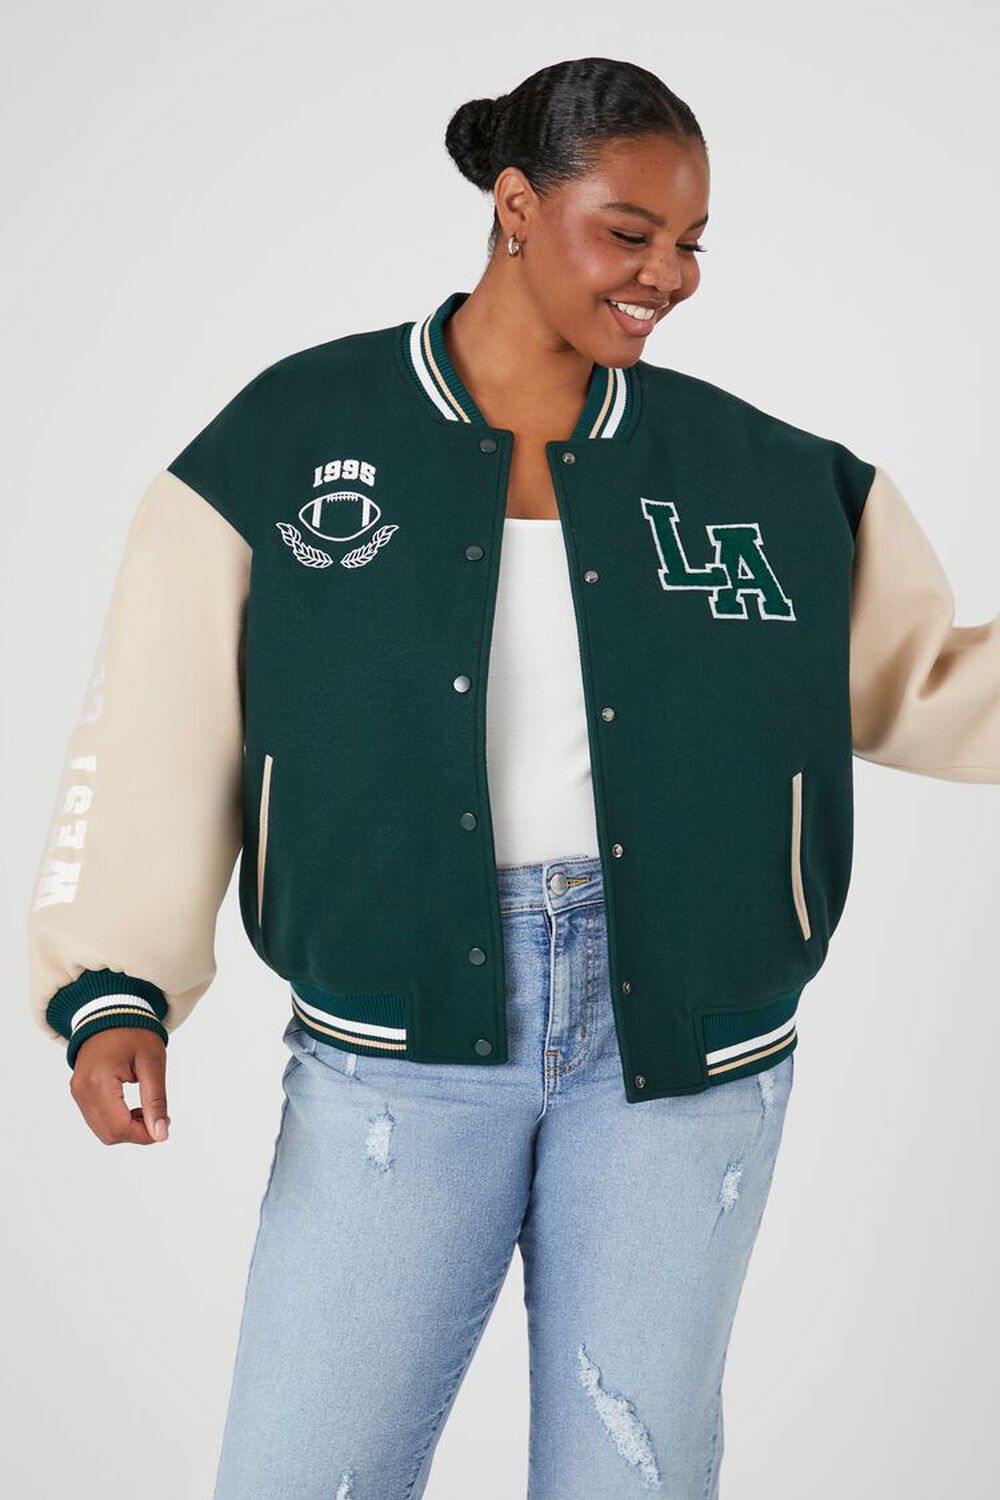 Jacket Makers Green and White Varsity Letterman Jacket